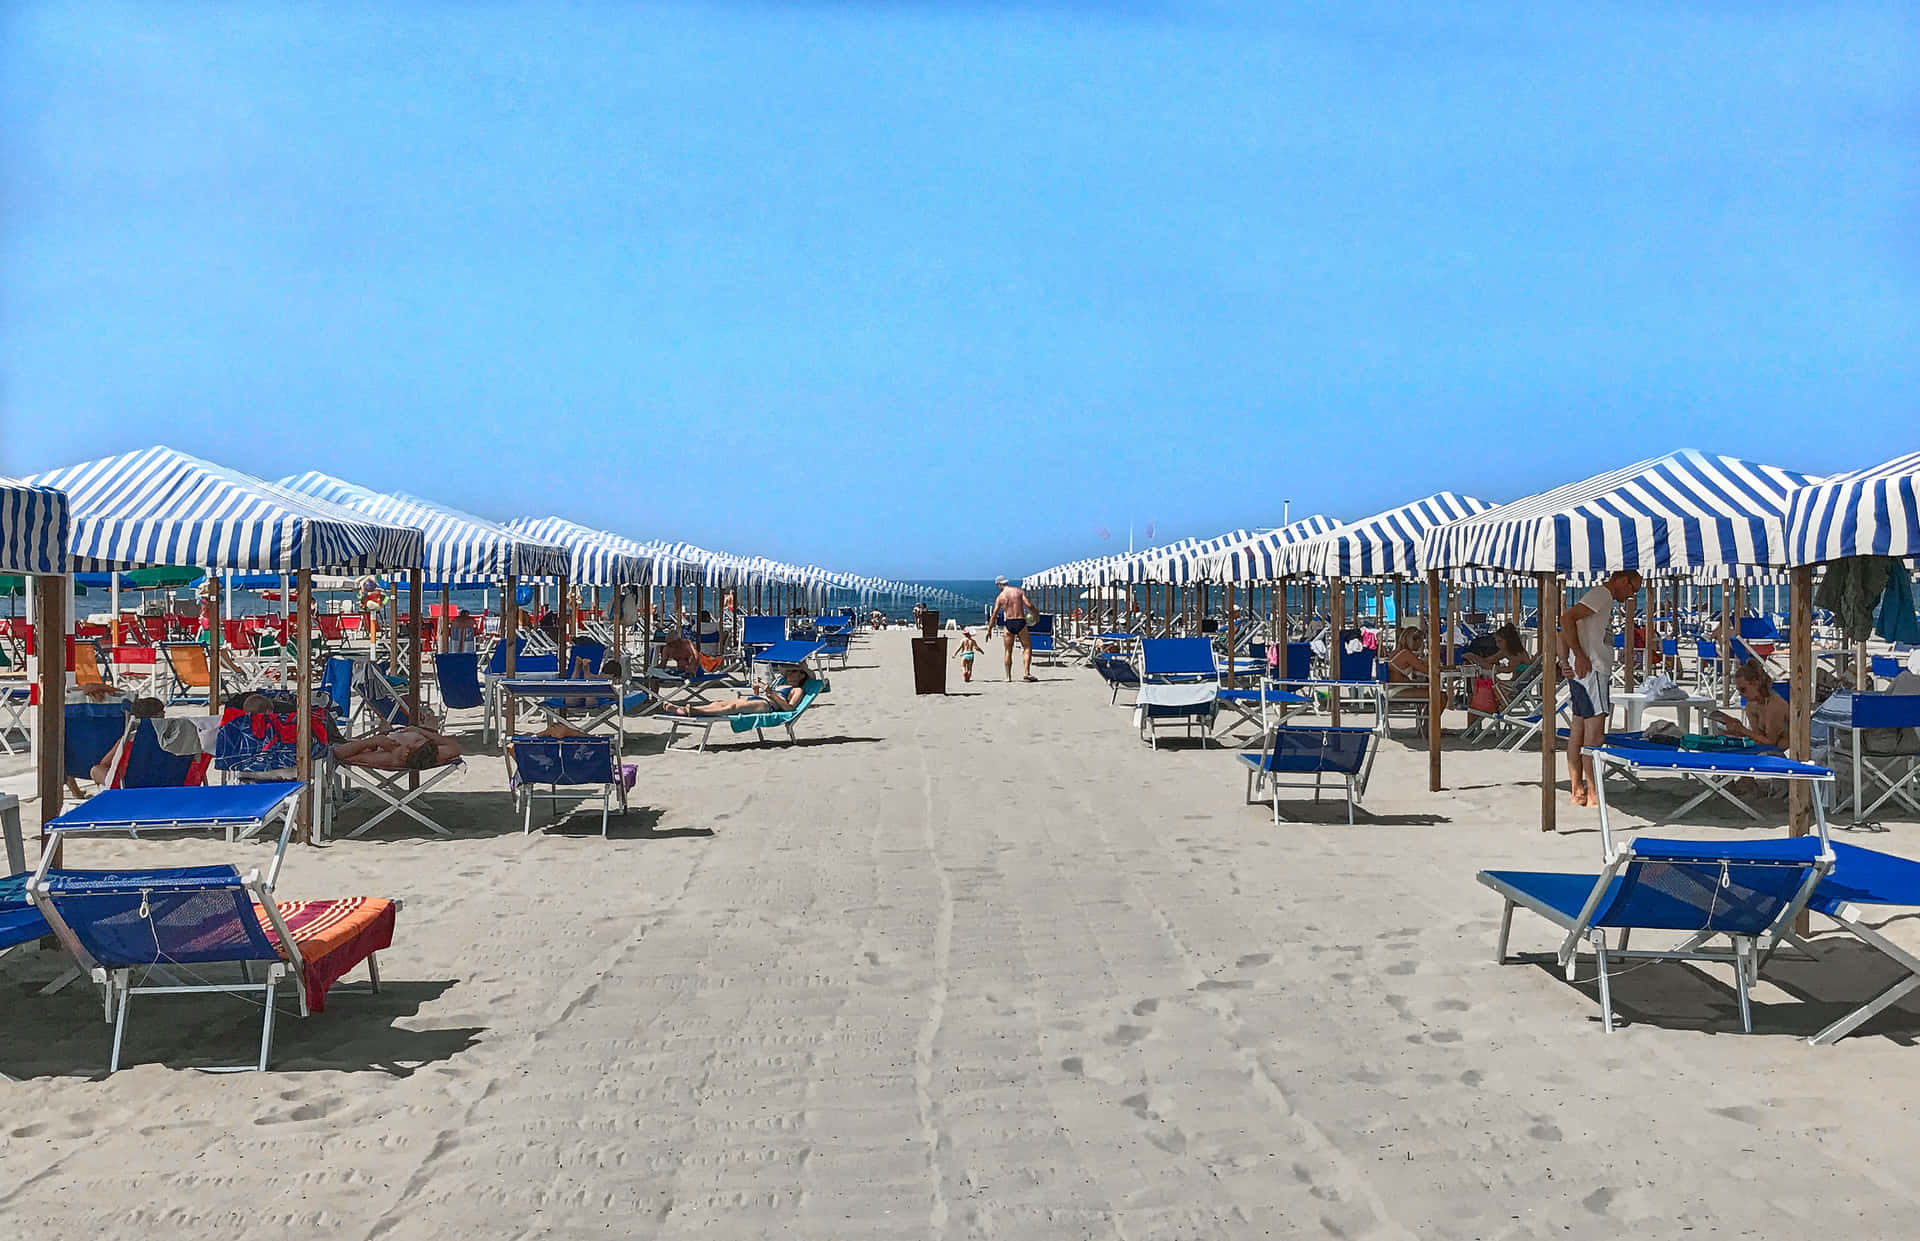 Download Italian Beach 2560 X 1655 Wallpaper Wallpaper | Wallpapers.com